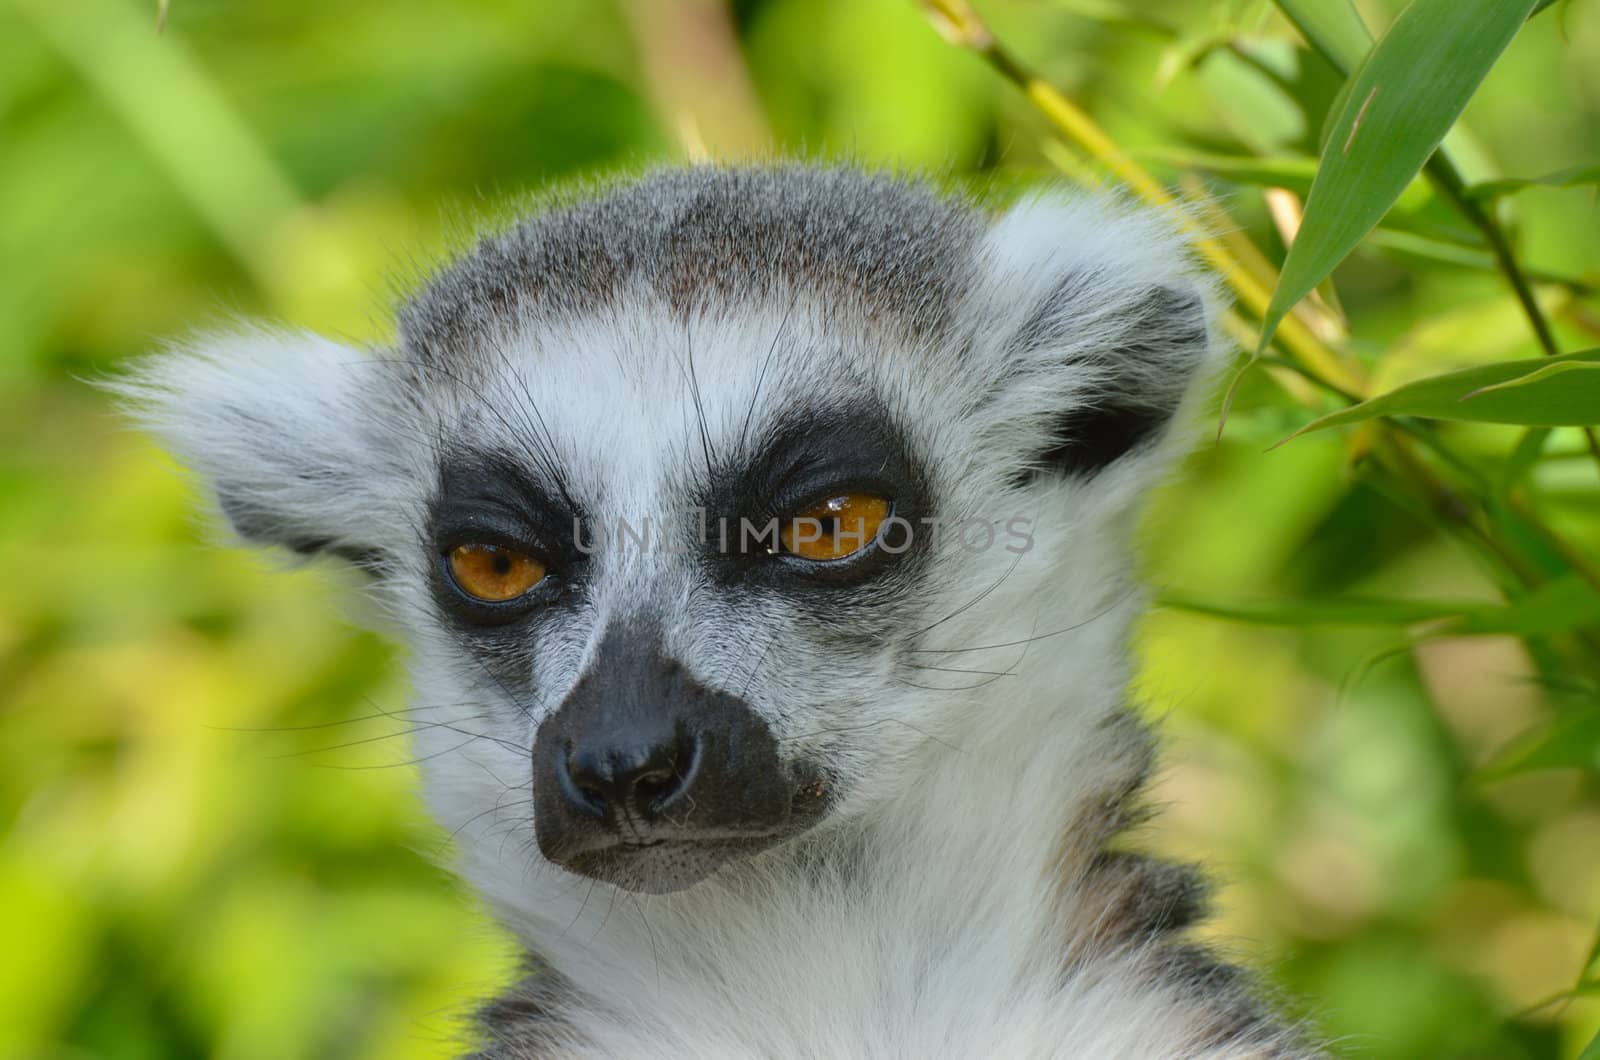 lemur head close up by pauws99